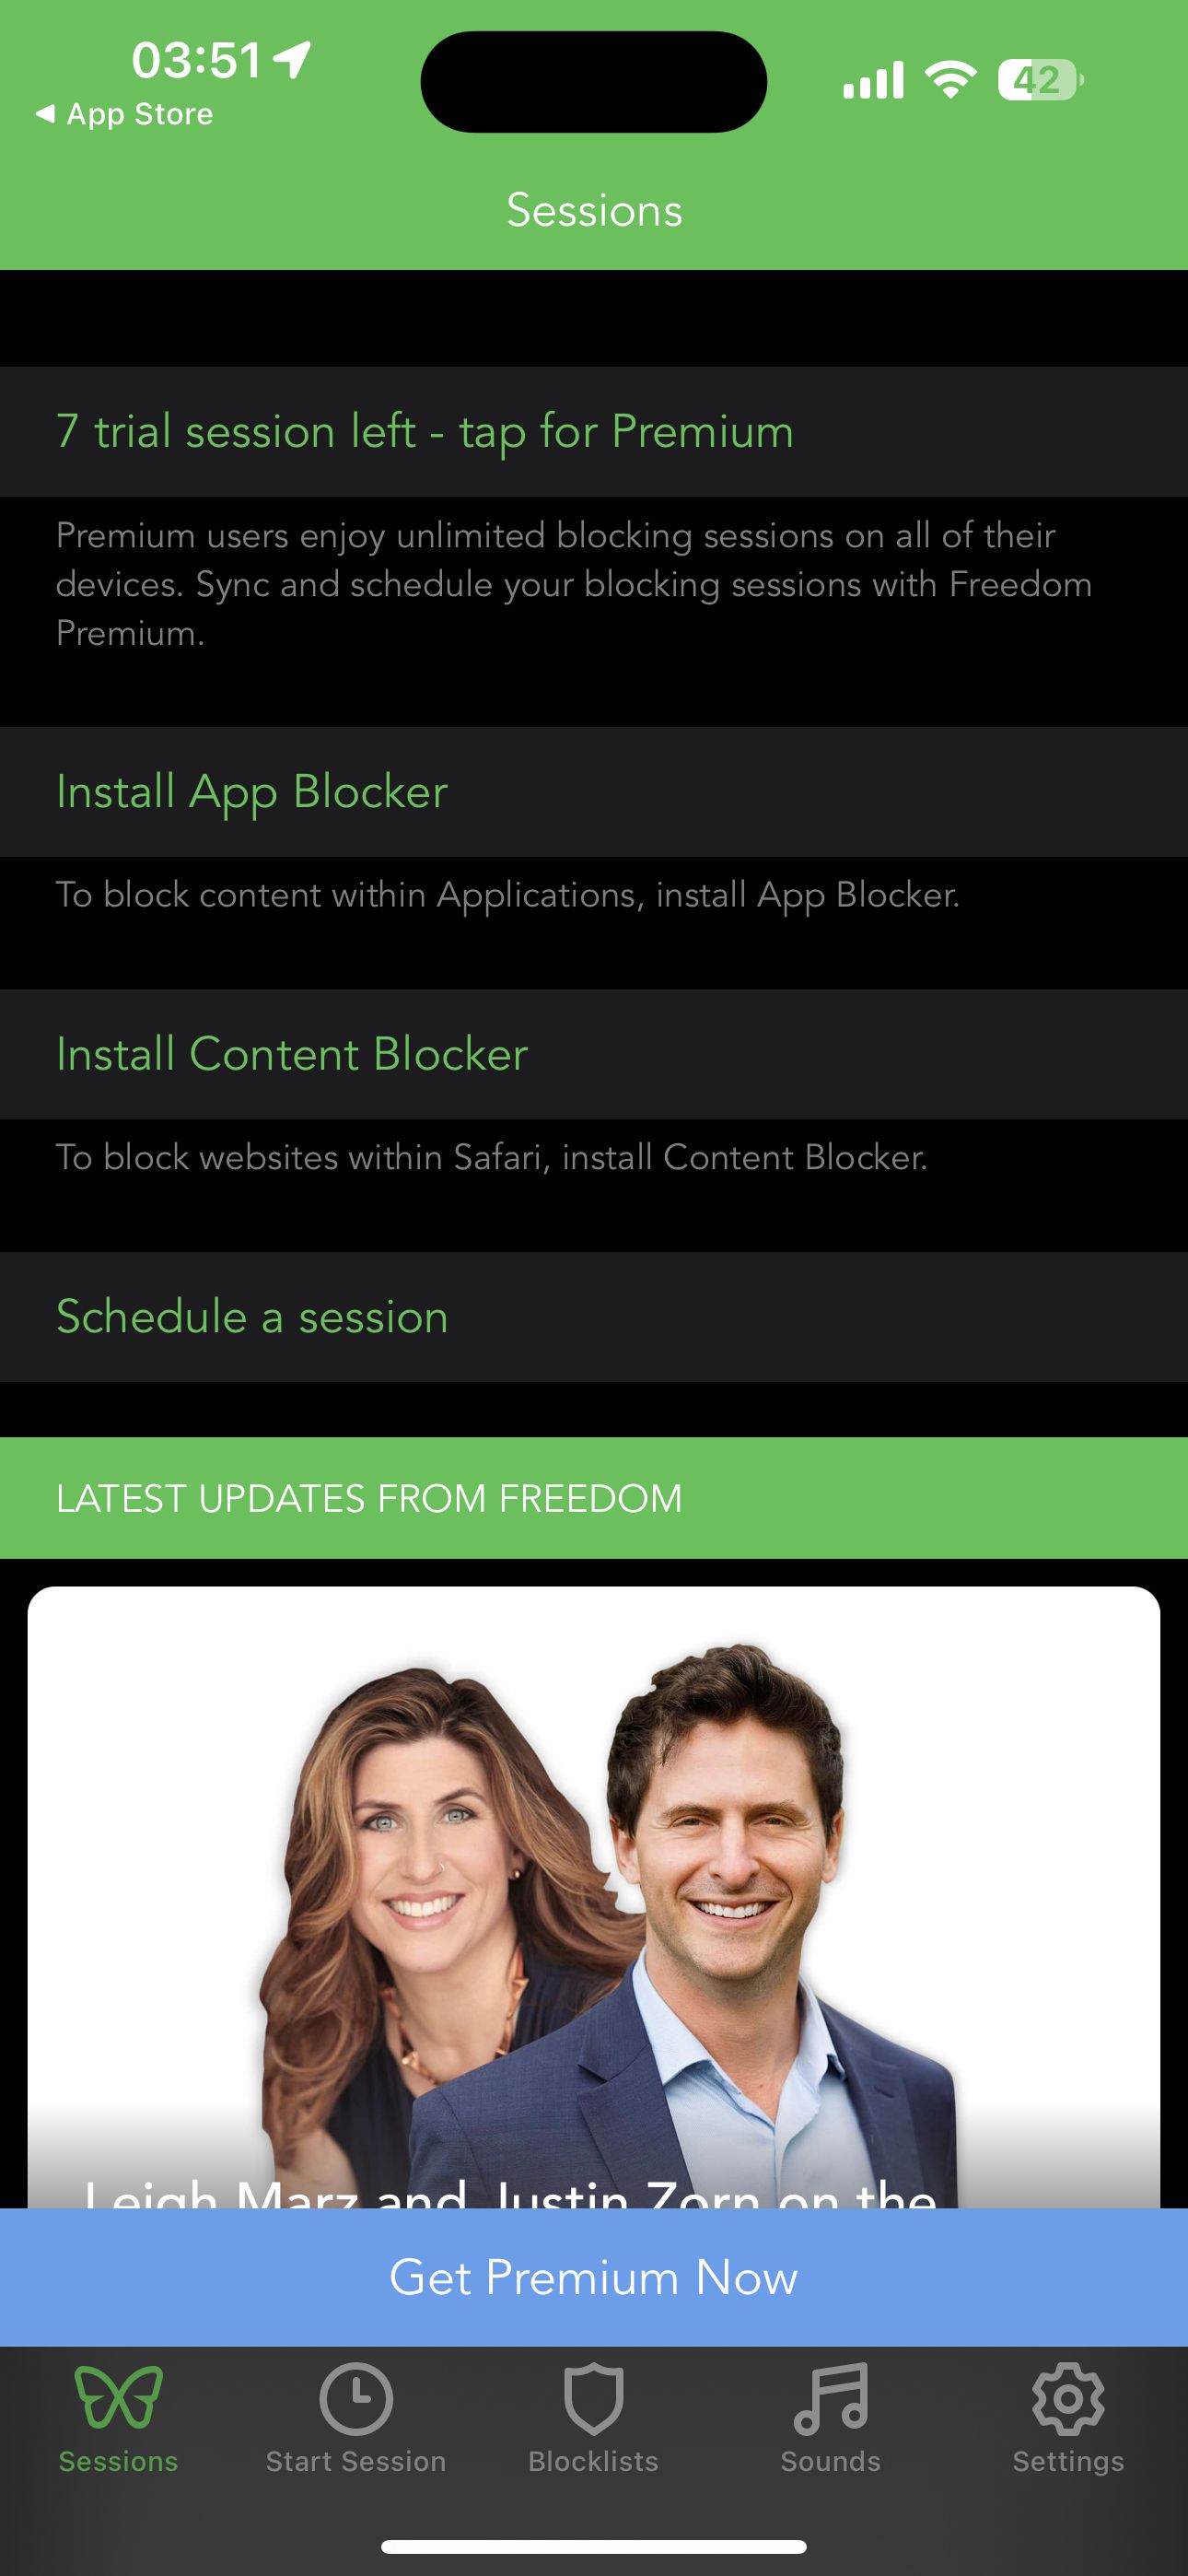 Freedom iOS app home screen